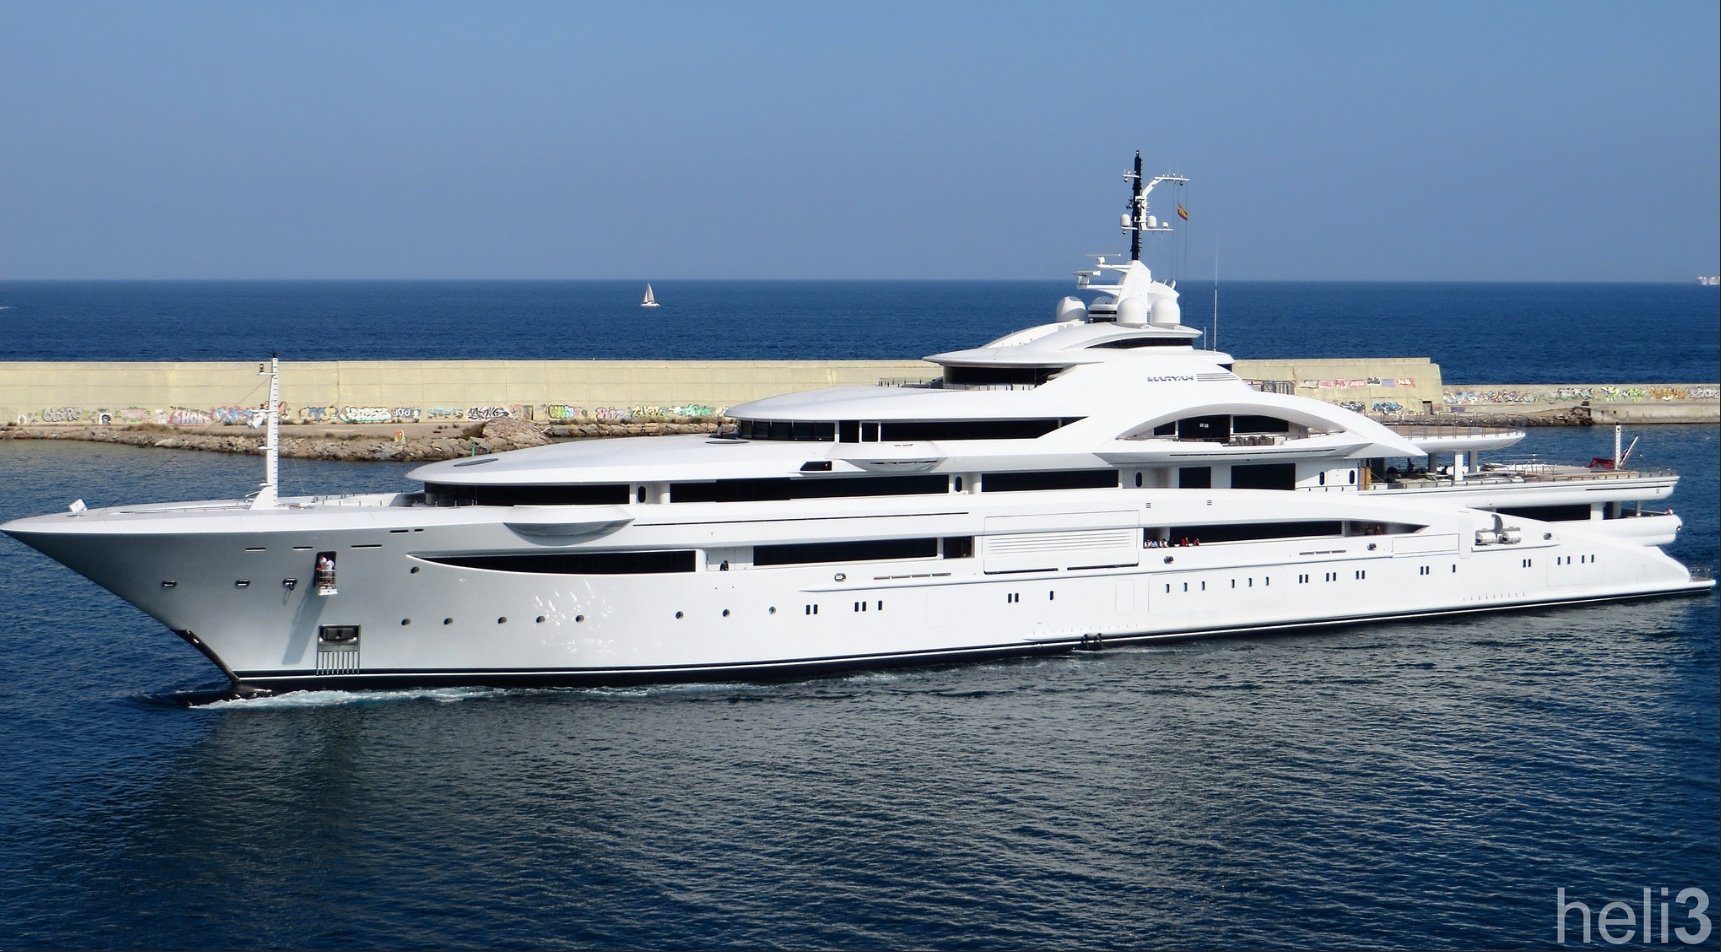 Maryah yacht - 2015 - owner Sheikh Tahnoon bin Zayed